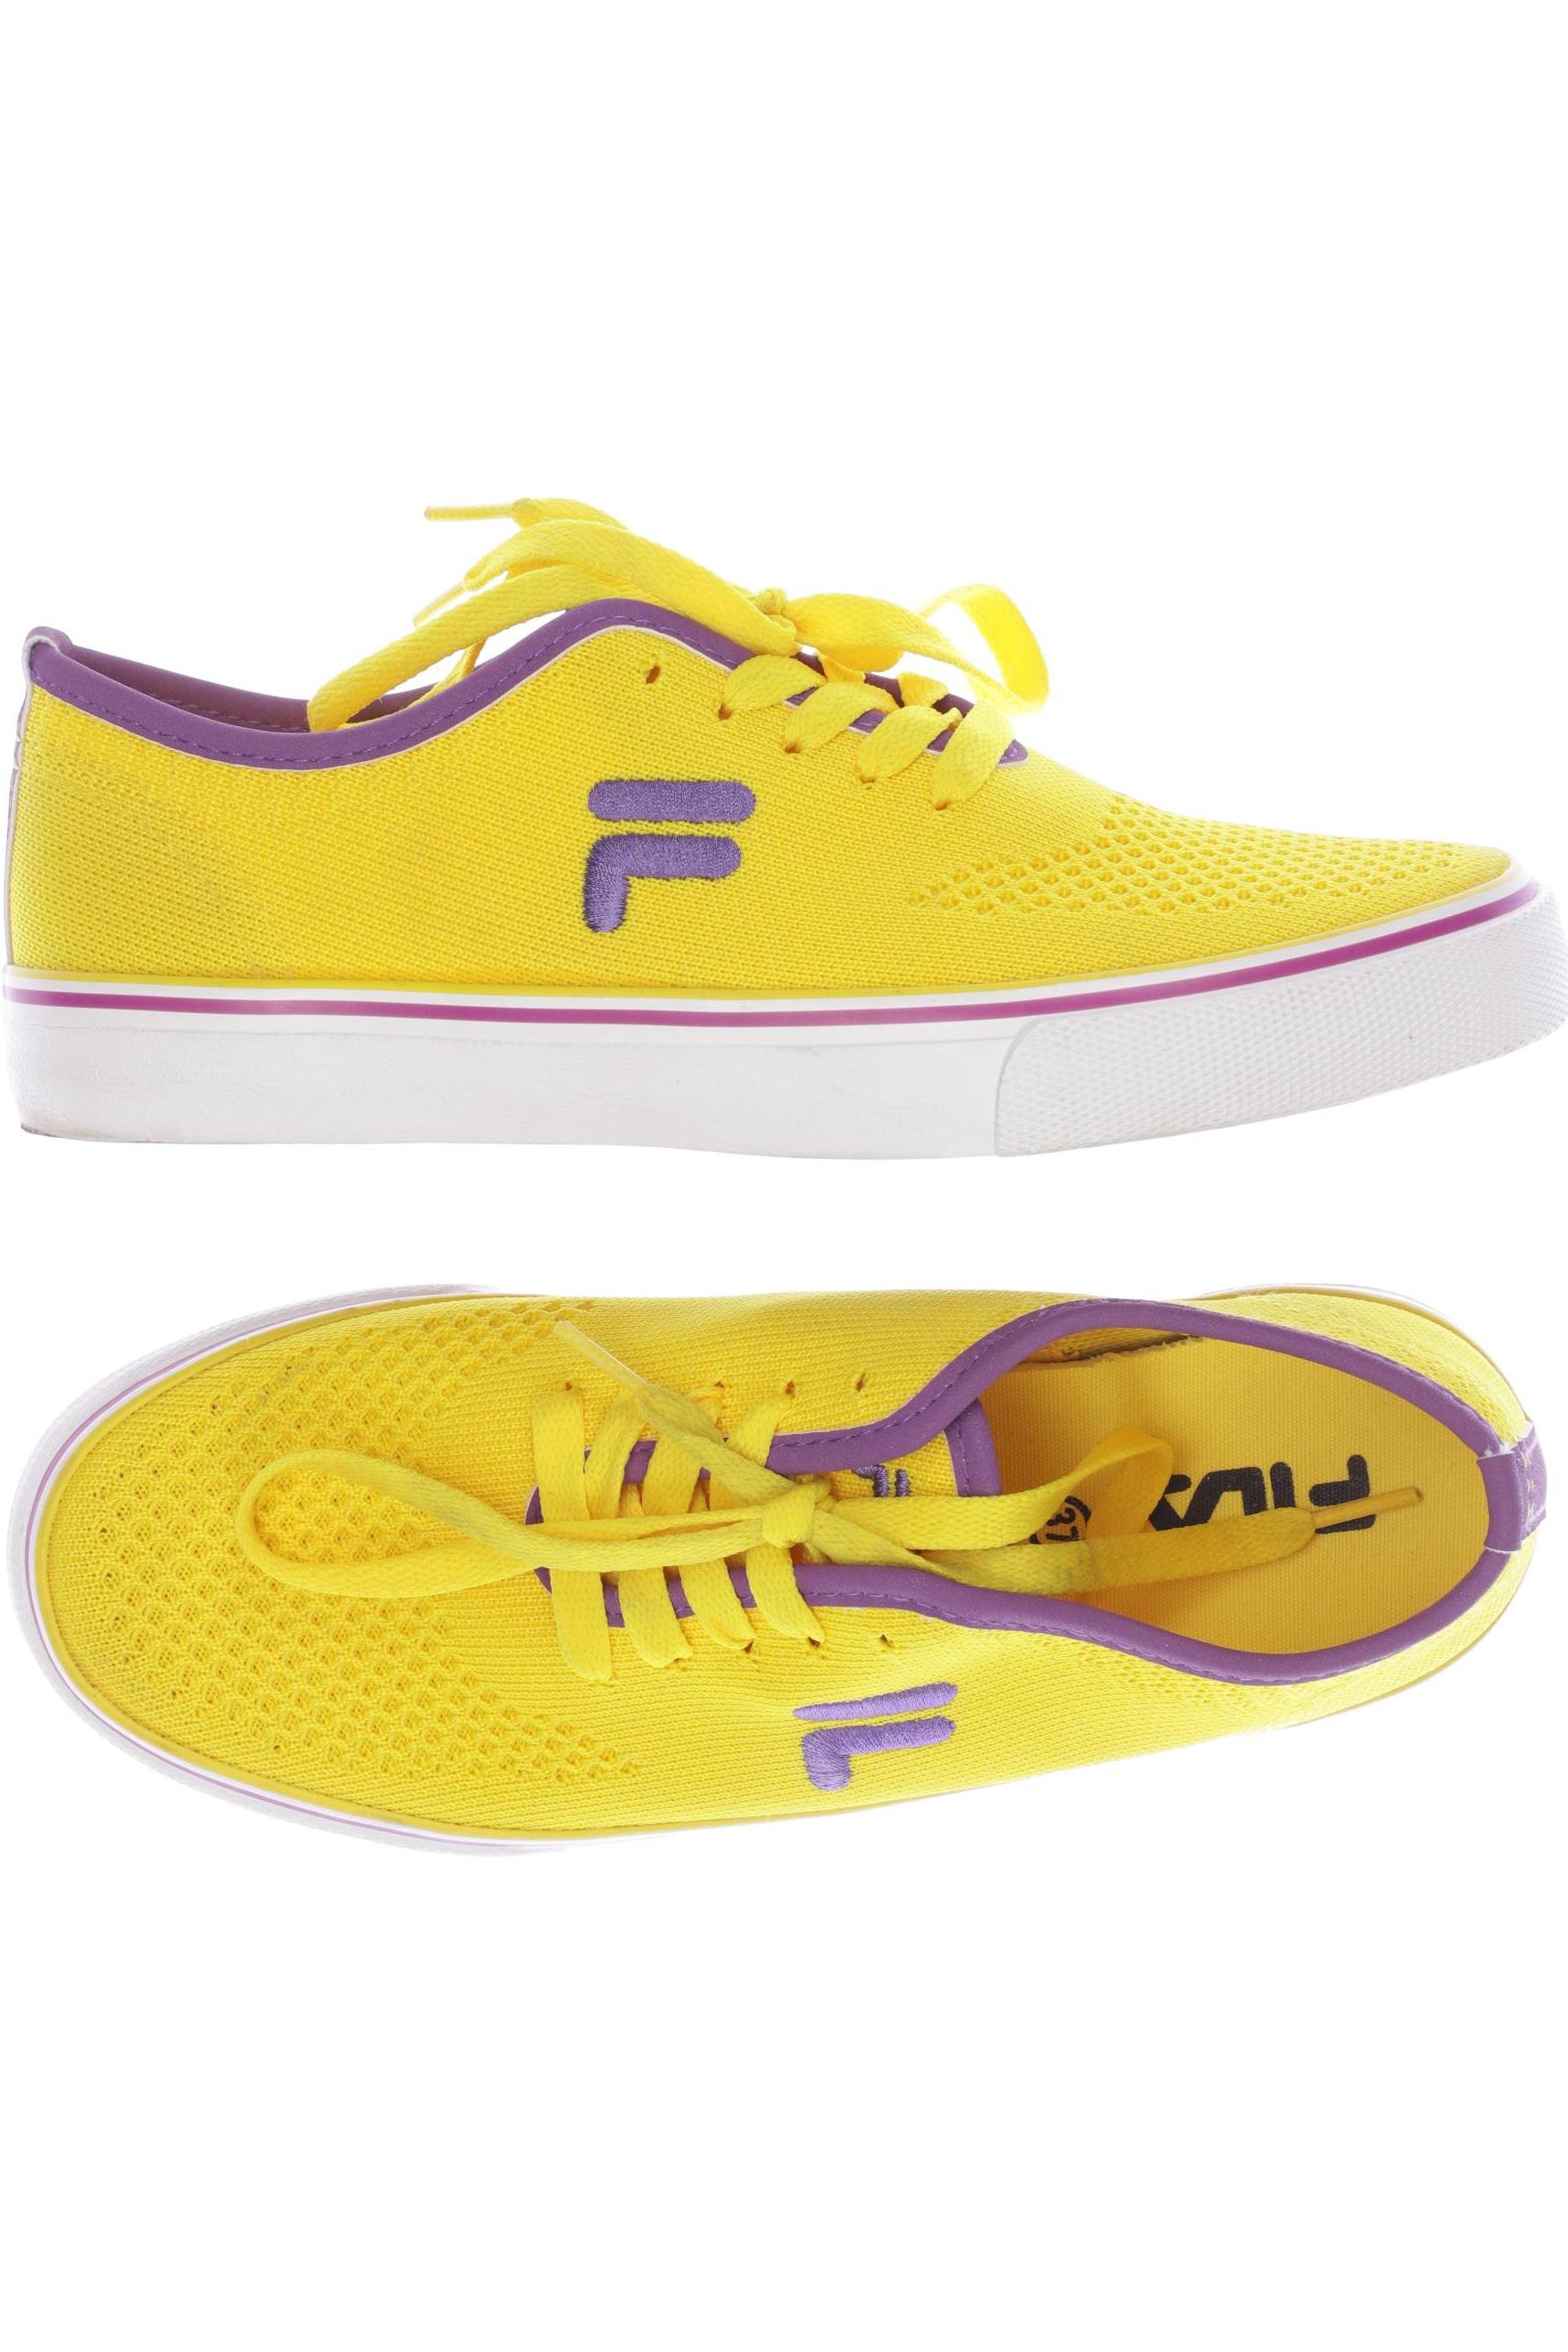 FILA Damen Sneakers, gelb von Fila